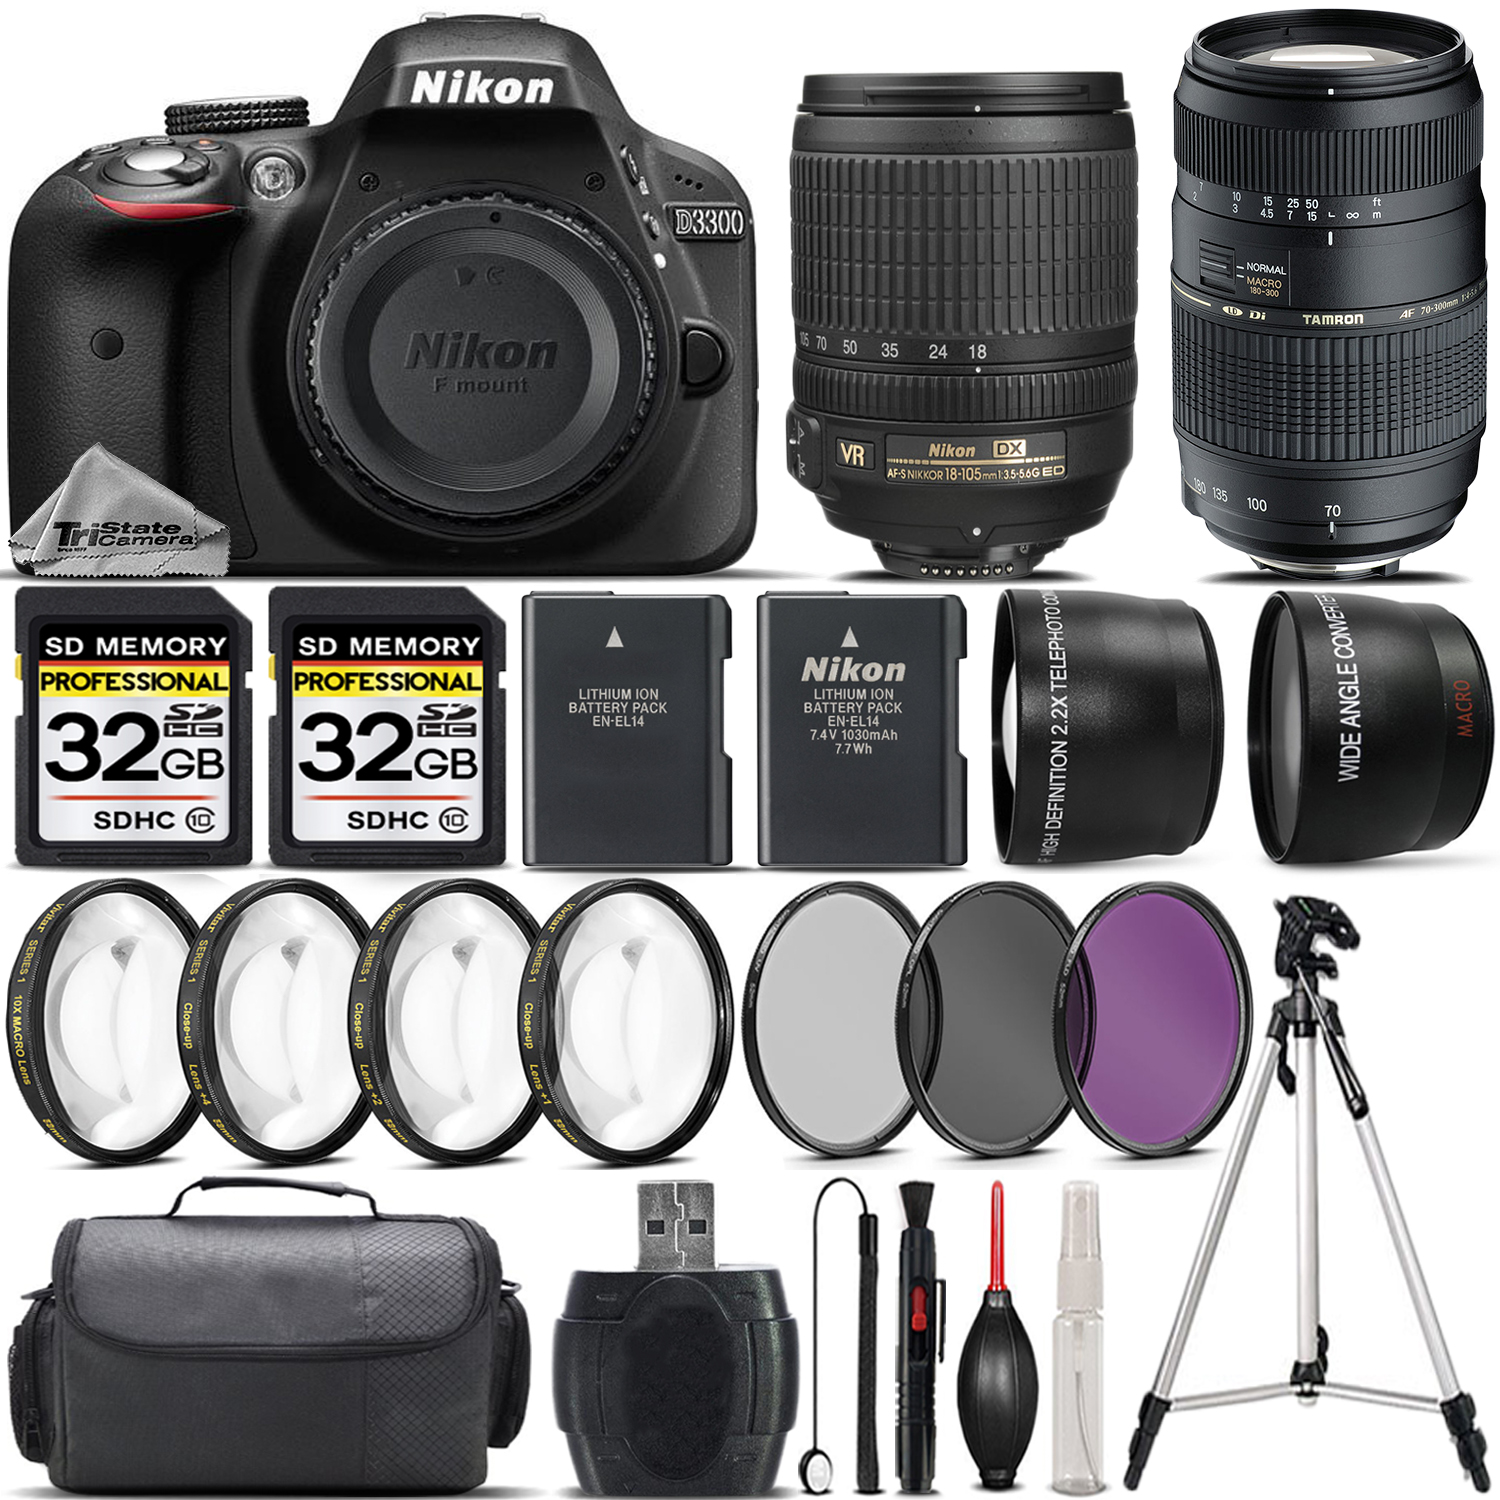 D3300 DSLR Camera with 18-105mm Lens + Tamron 70-300 Lens -64GB Bundle Kit *FREE SHIPPING*